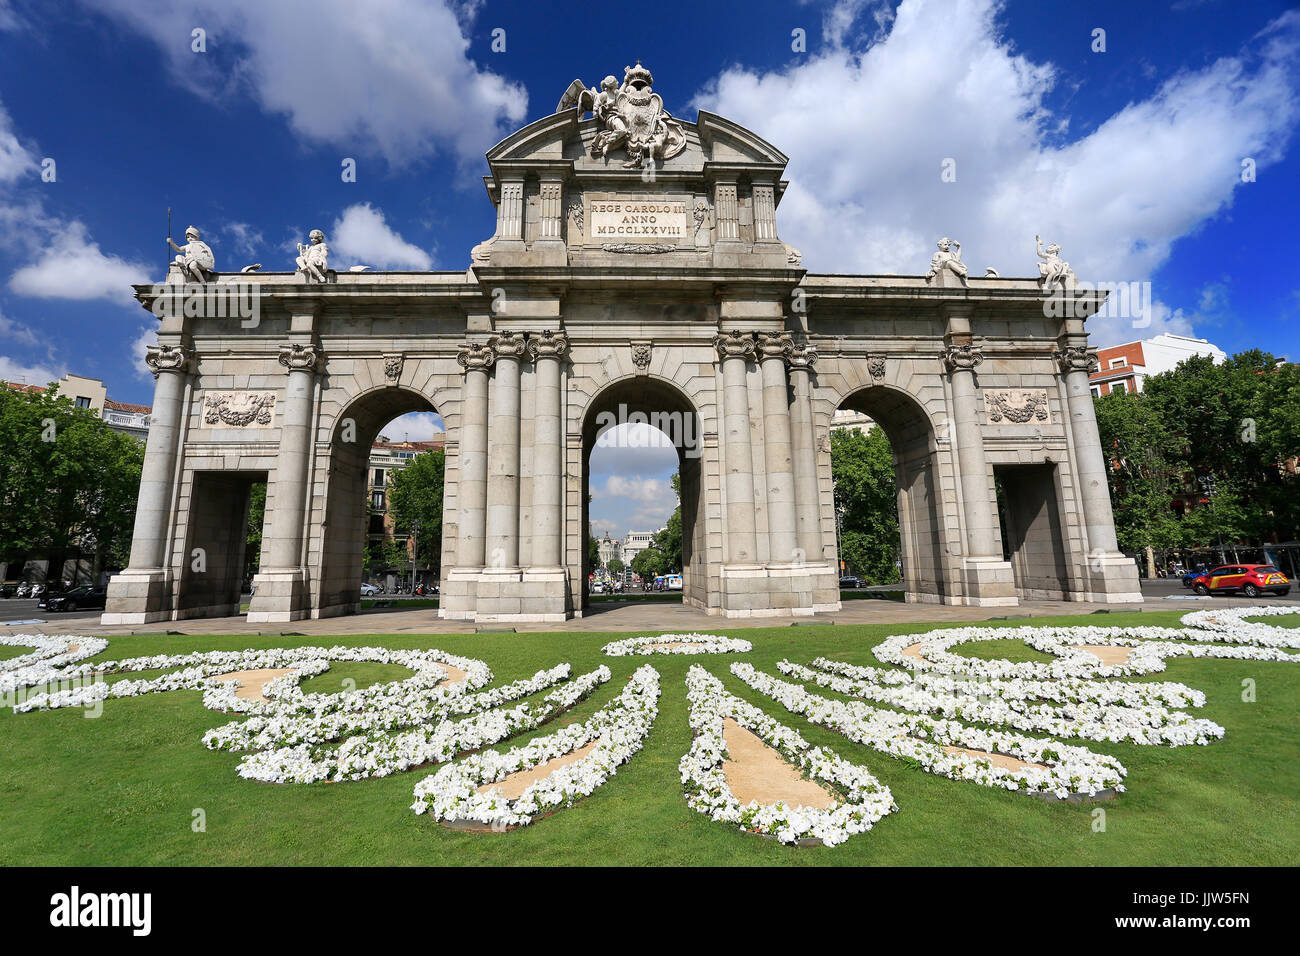 Puerta de Alcala (Alcala Gate) in Madrid, Spain Stock Photo - Alamy